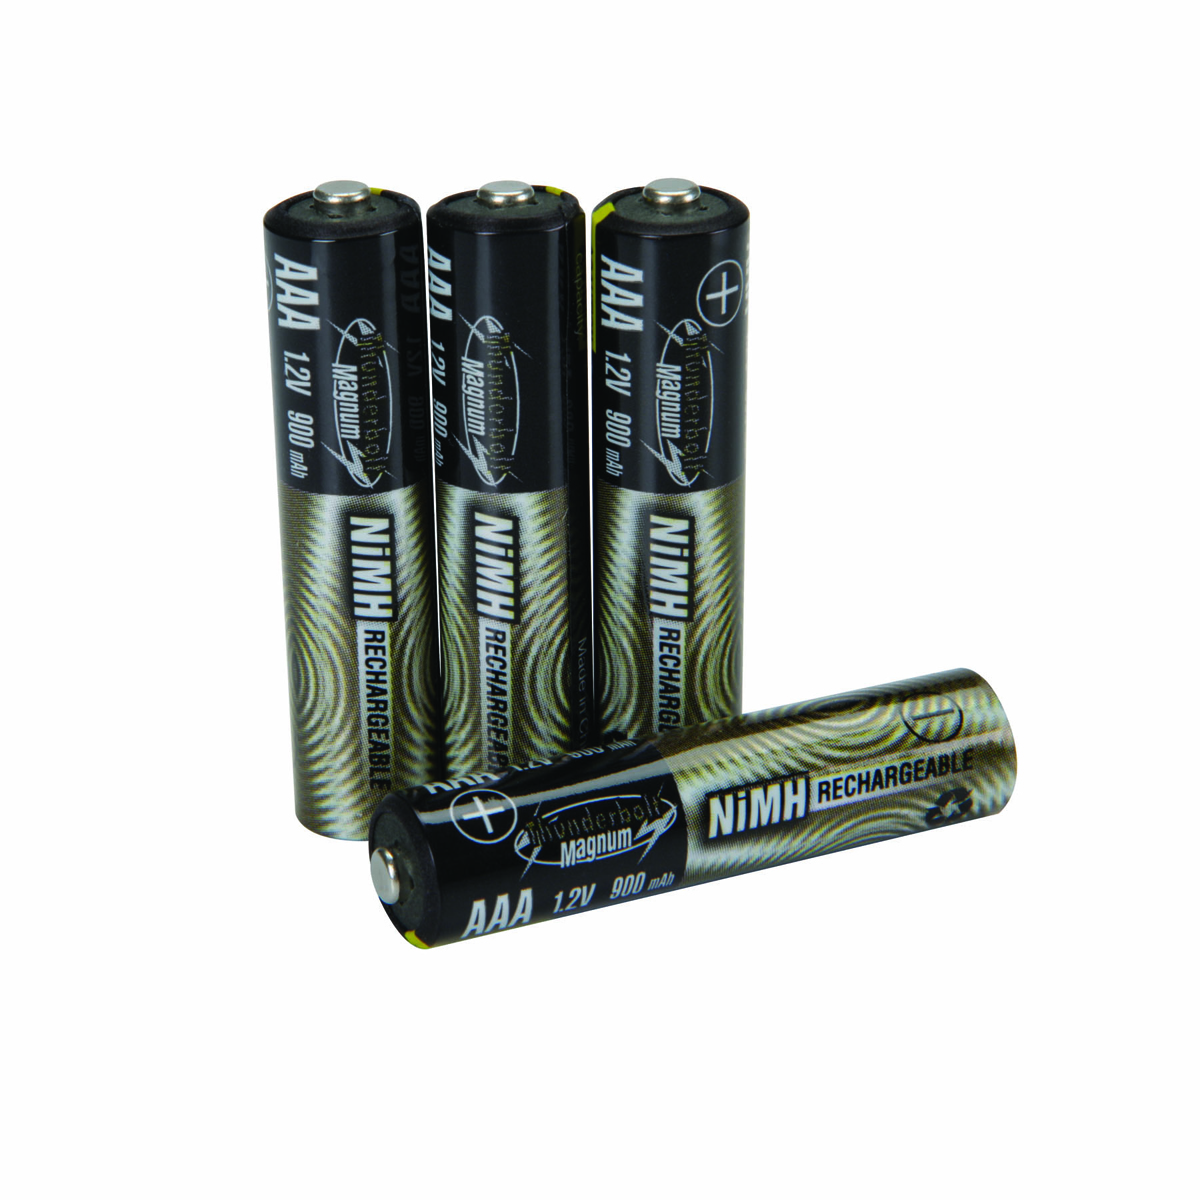 THUNDERBOLT AAA High Capacity NiMH Rechargeable Batteries 4 Pk. - Item 97861